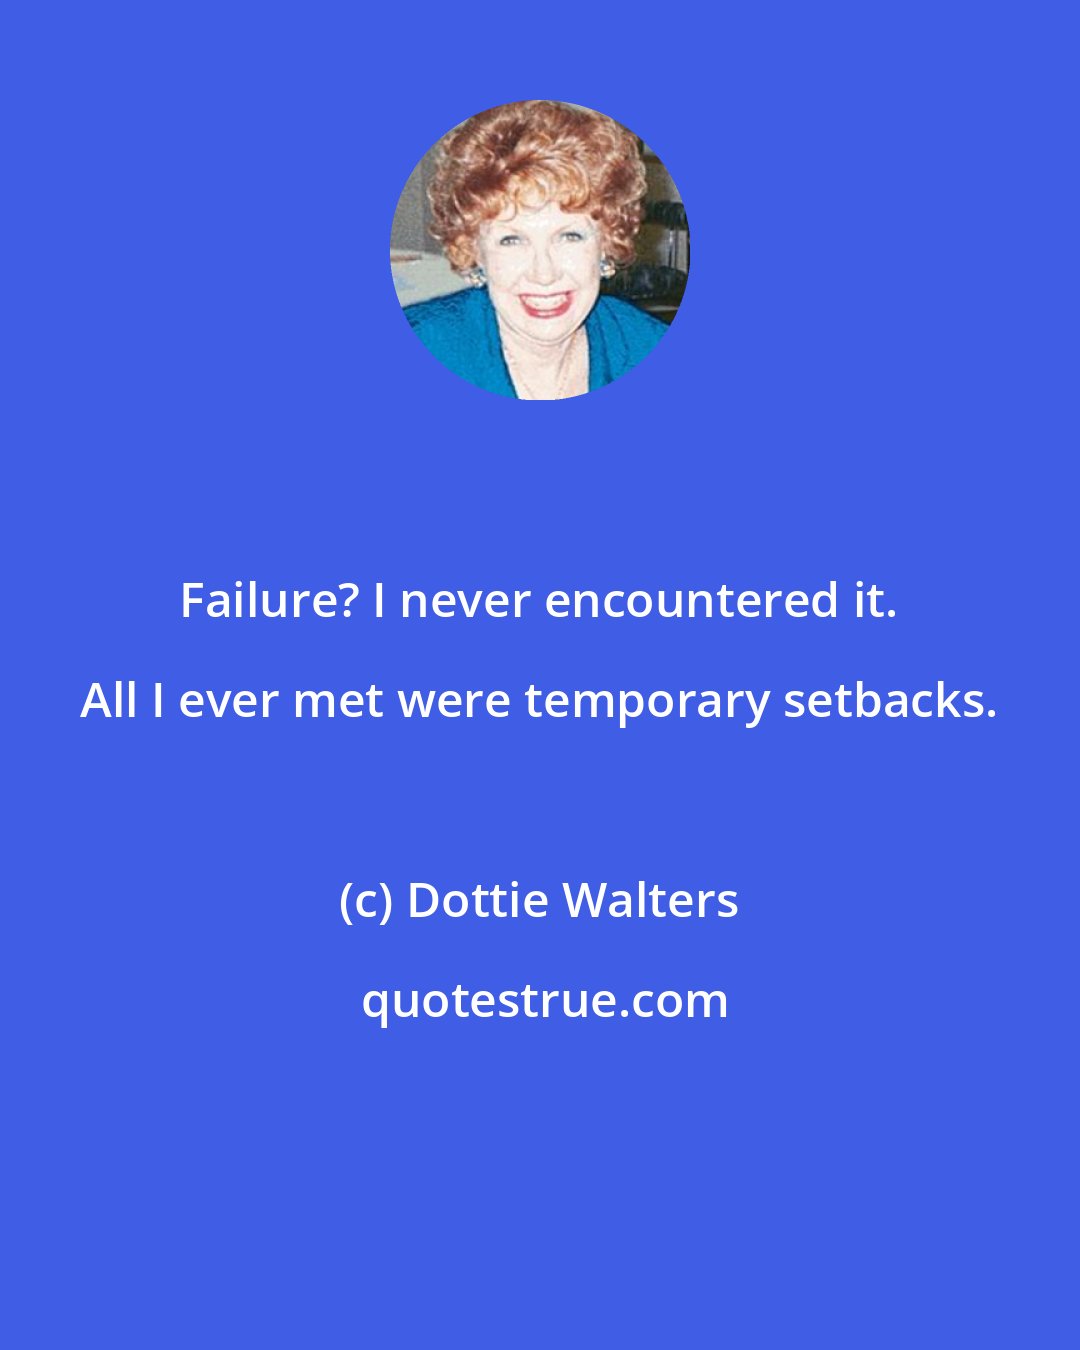 Dottie Walters: Failure? I never encountered it. All I ever met were temporary setbacks.